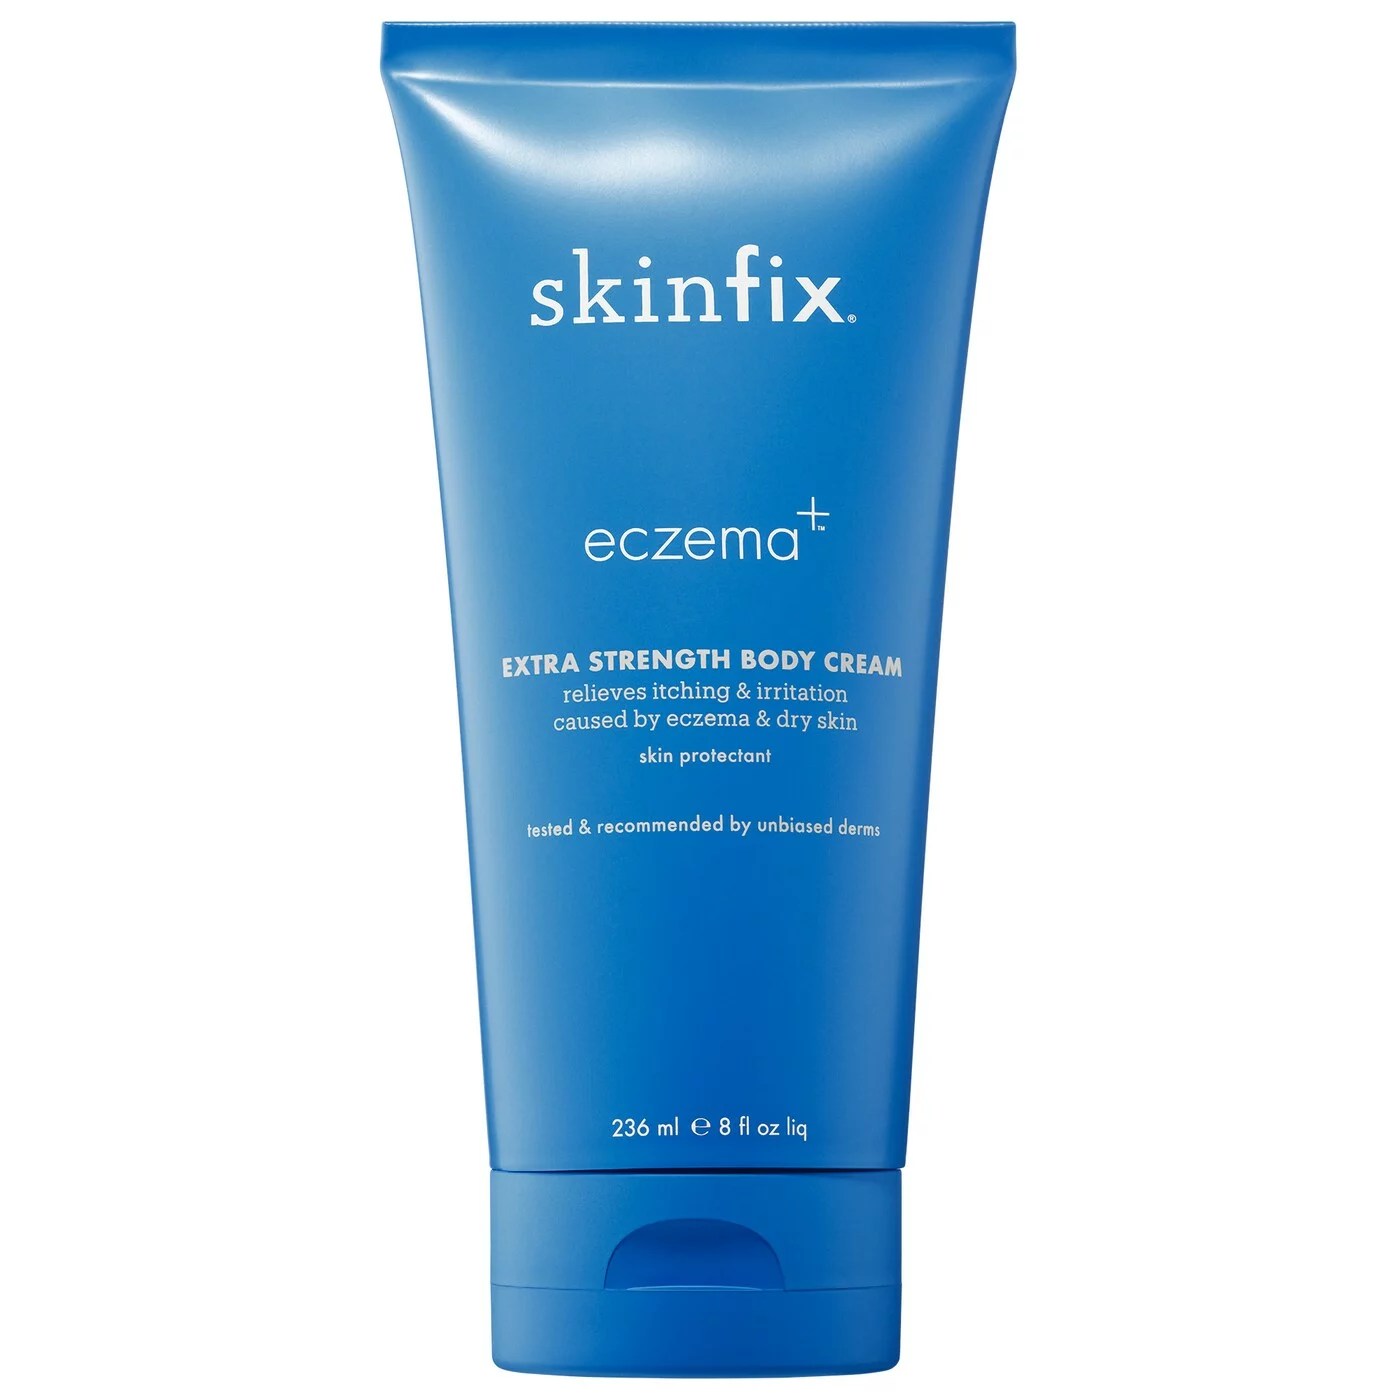 skinfix eczema extra strength body cream